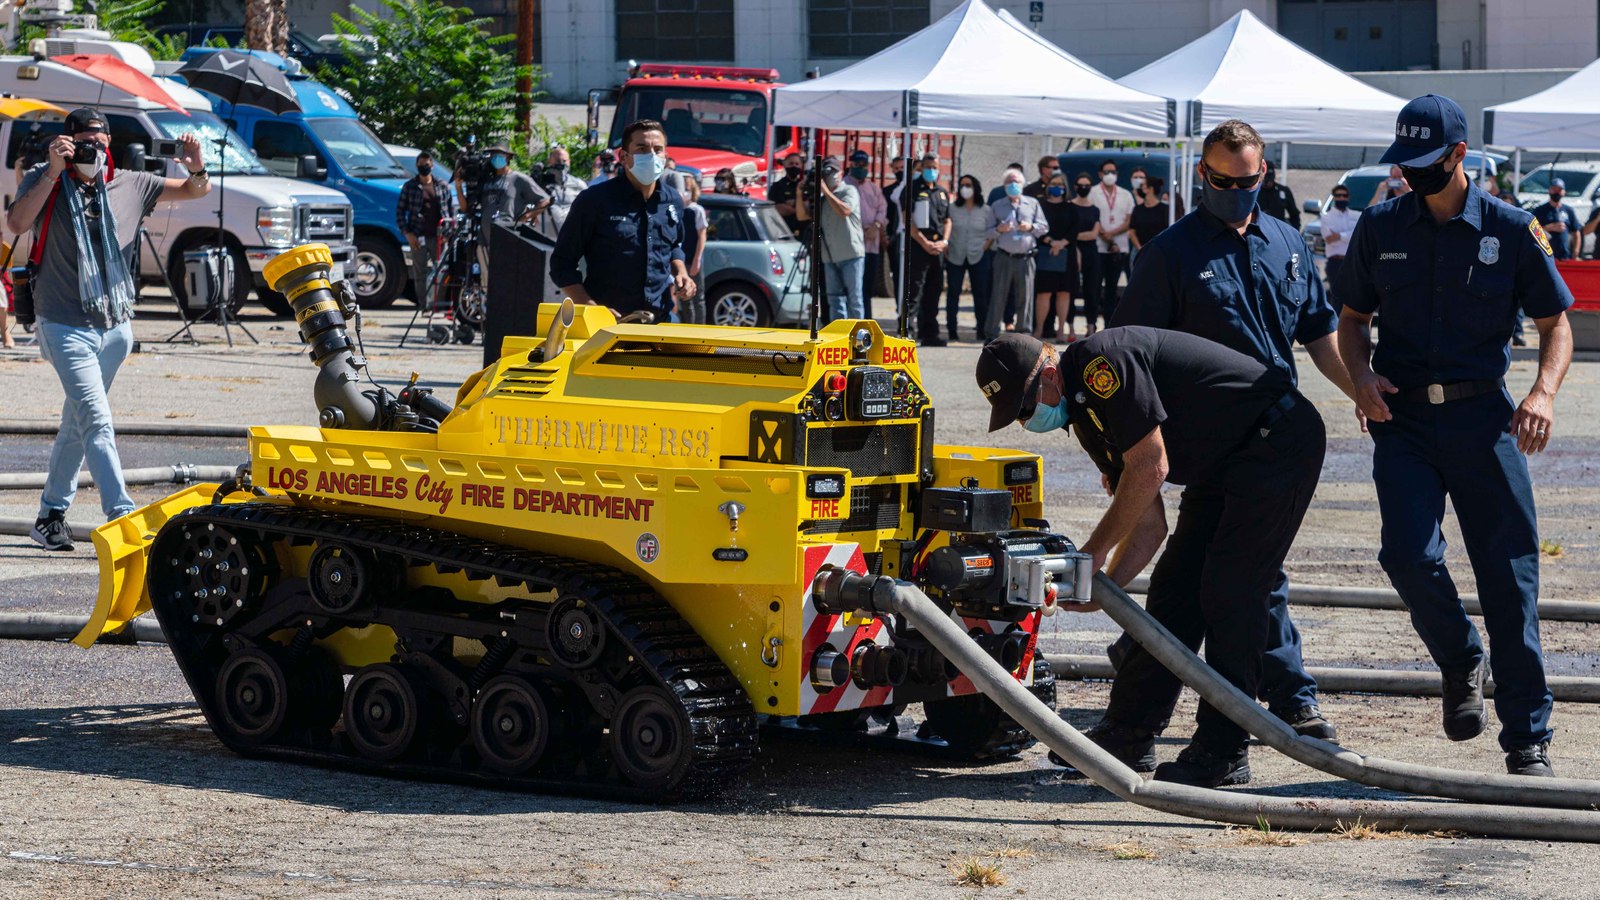 Firefighting robot helps battle blaze in Los Angeles